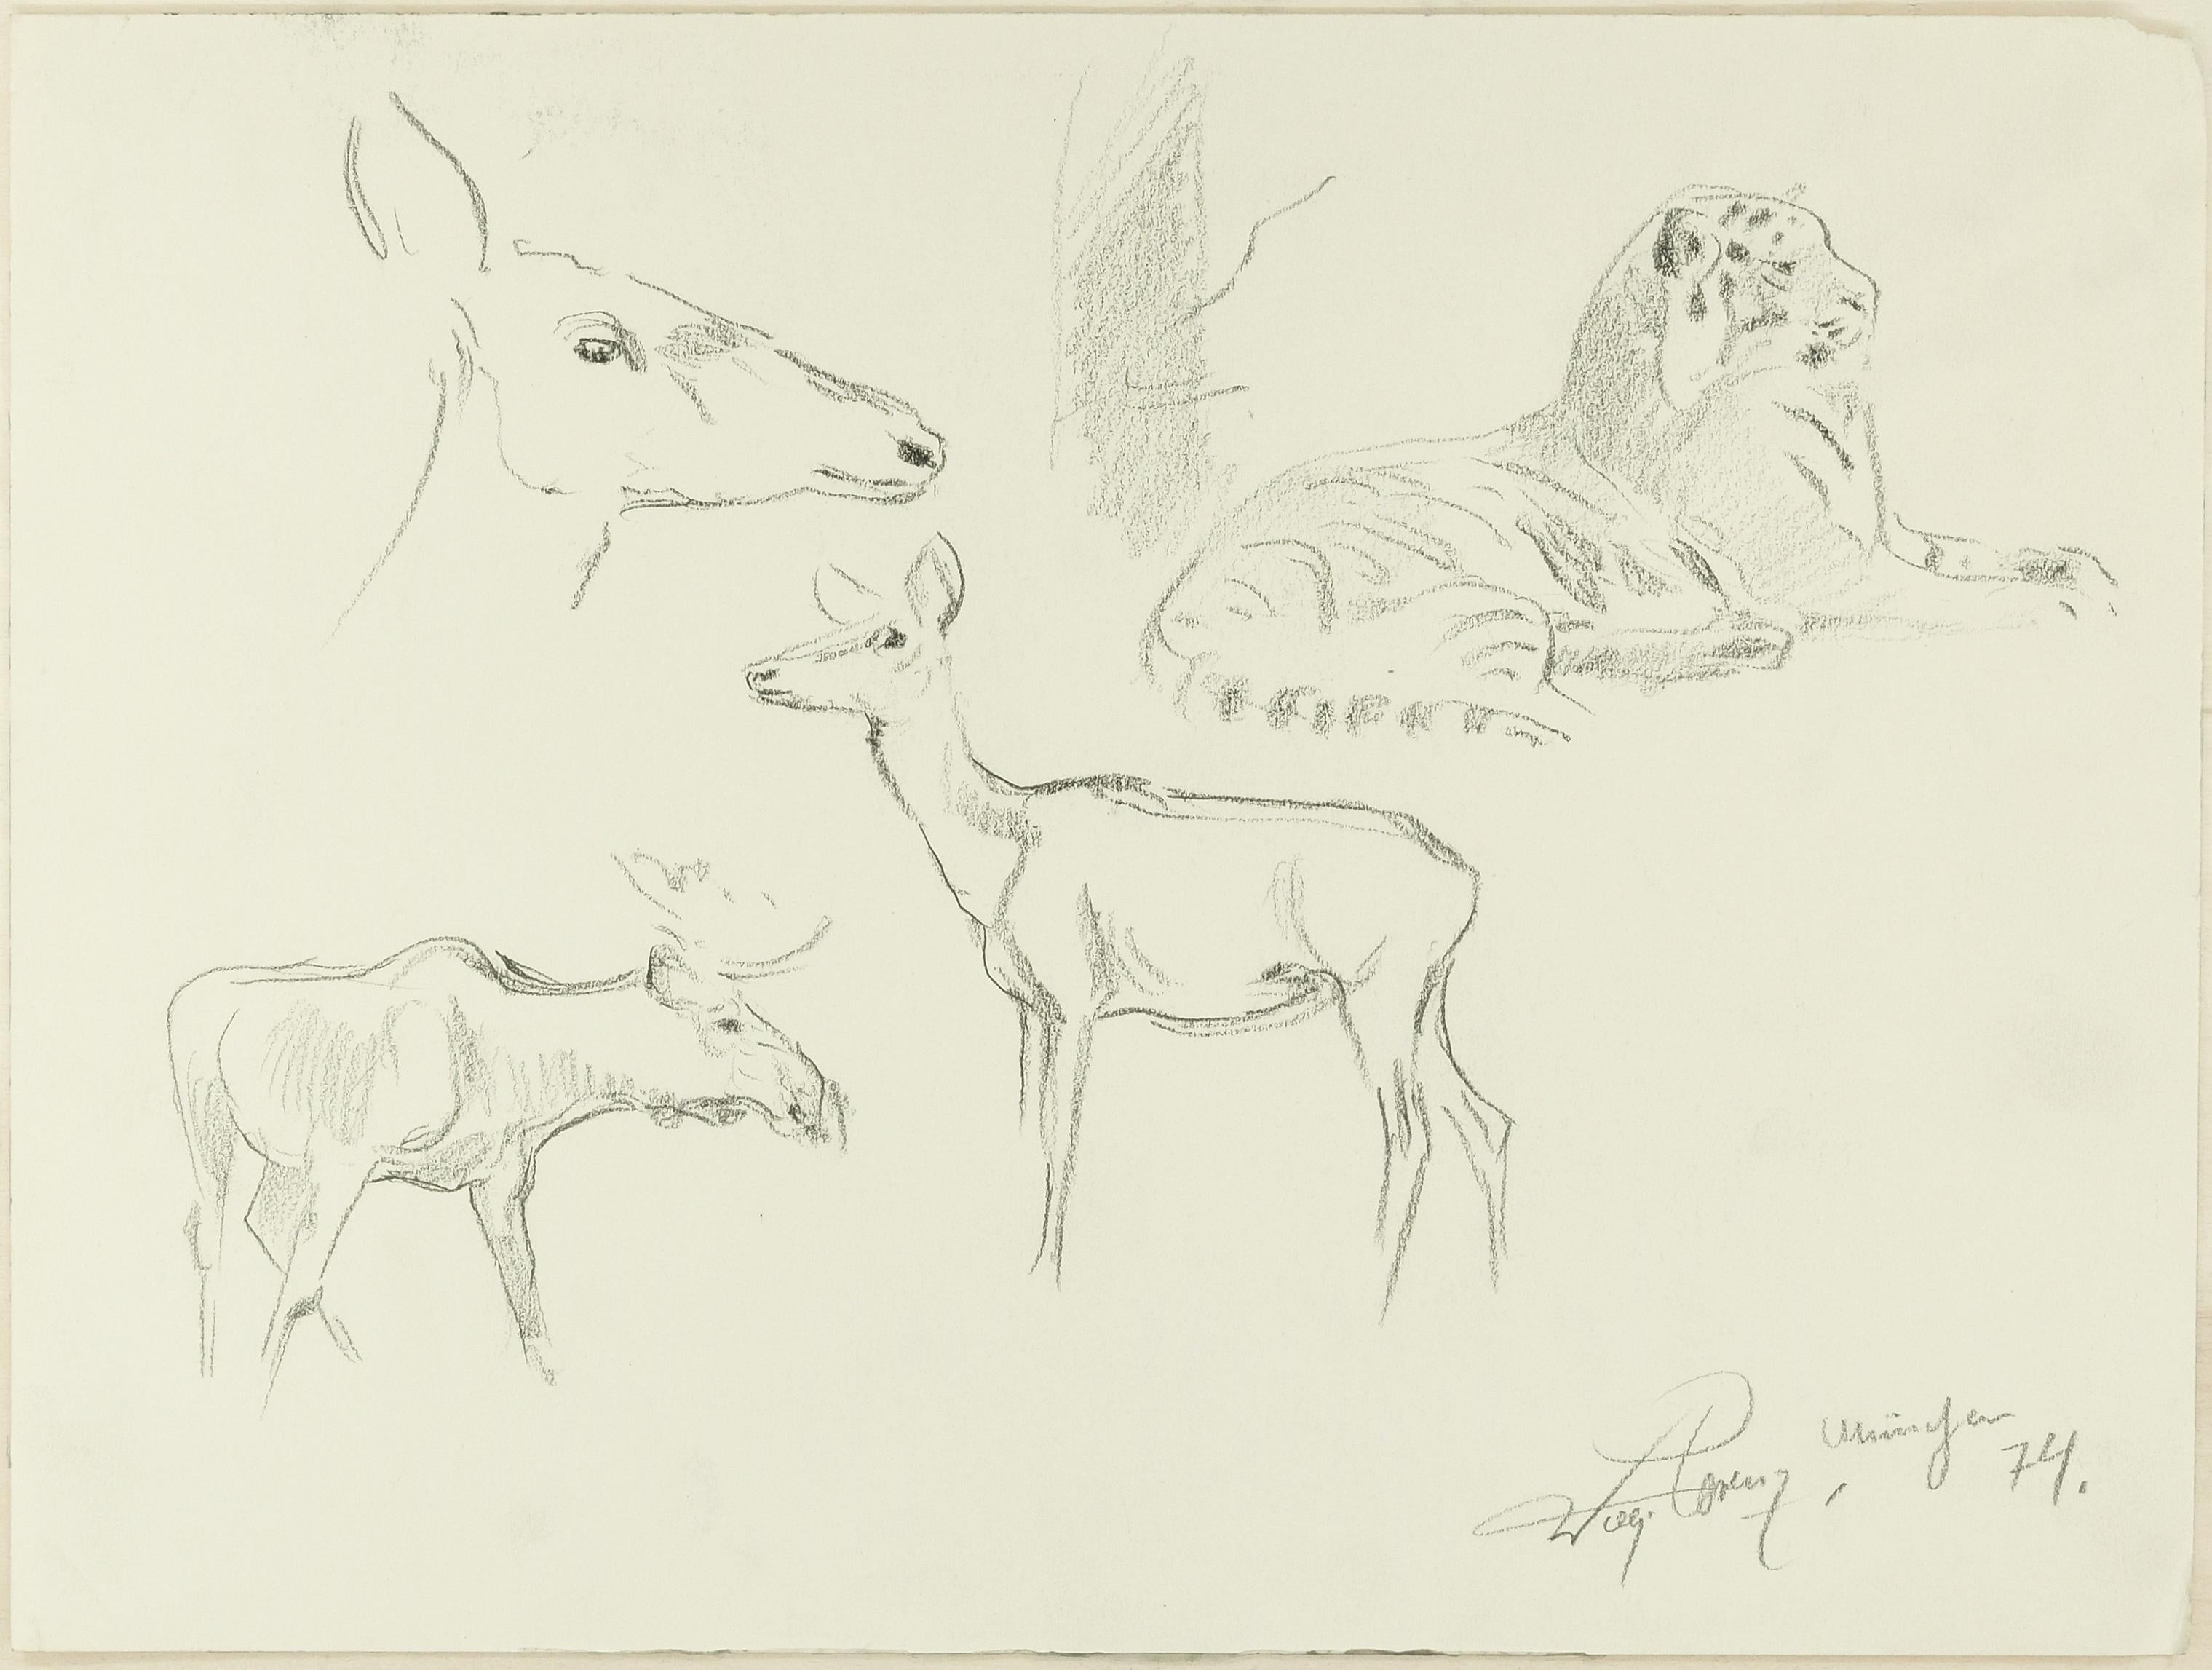 Wilhelm Lorenz Animal Art - Study of Animals - Original Pencil Drawing by Willy Lorenz - 1940s